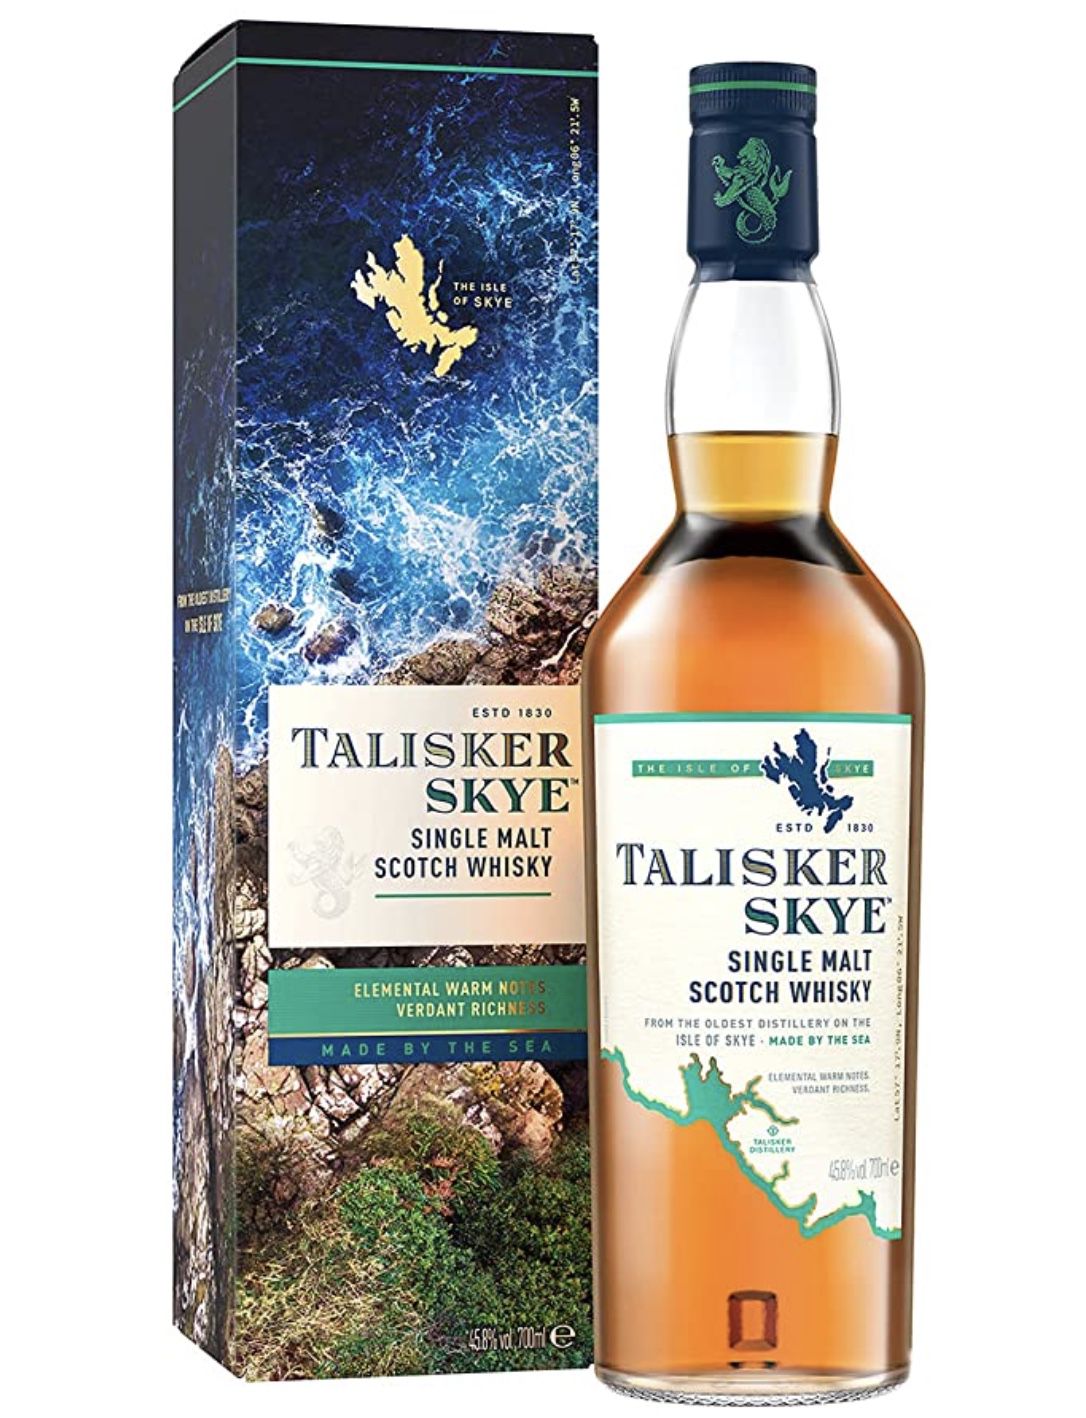 700ml Talisker Skye Single Malt Scotch Whisky 45,8% für 25€ (statt 36€)   Prime Sparabo